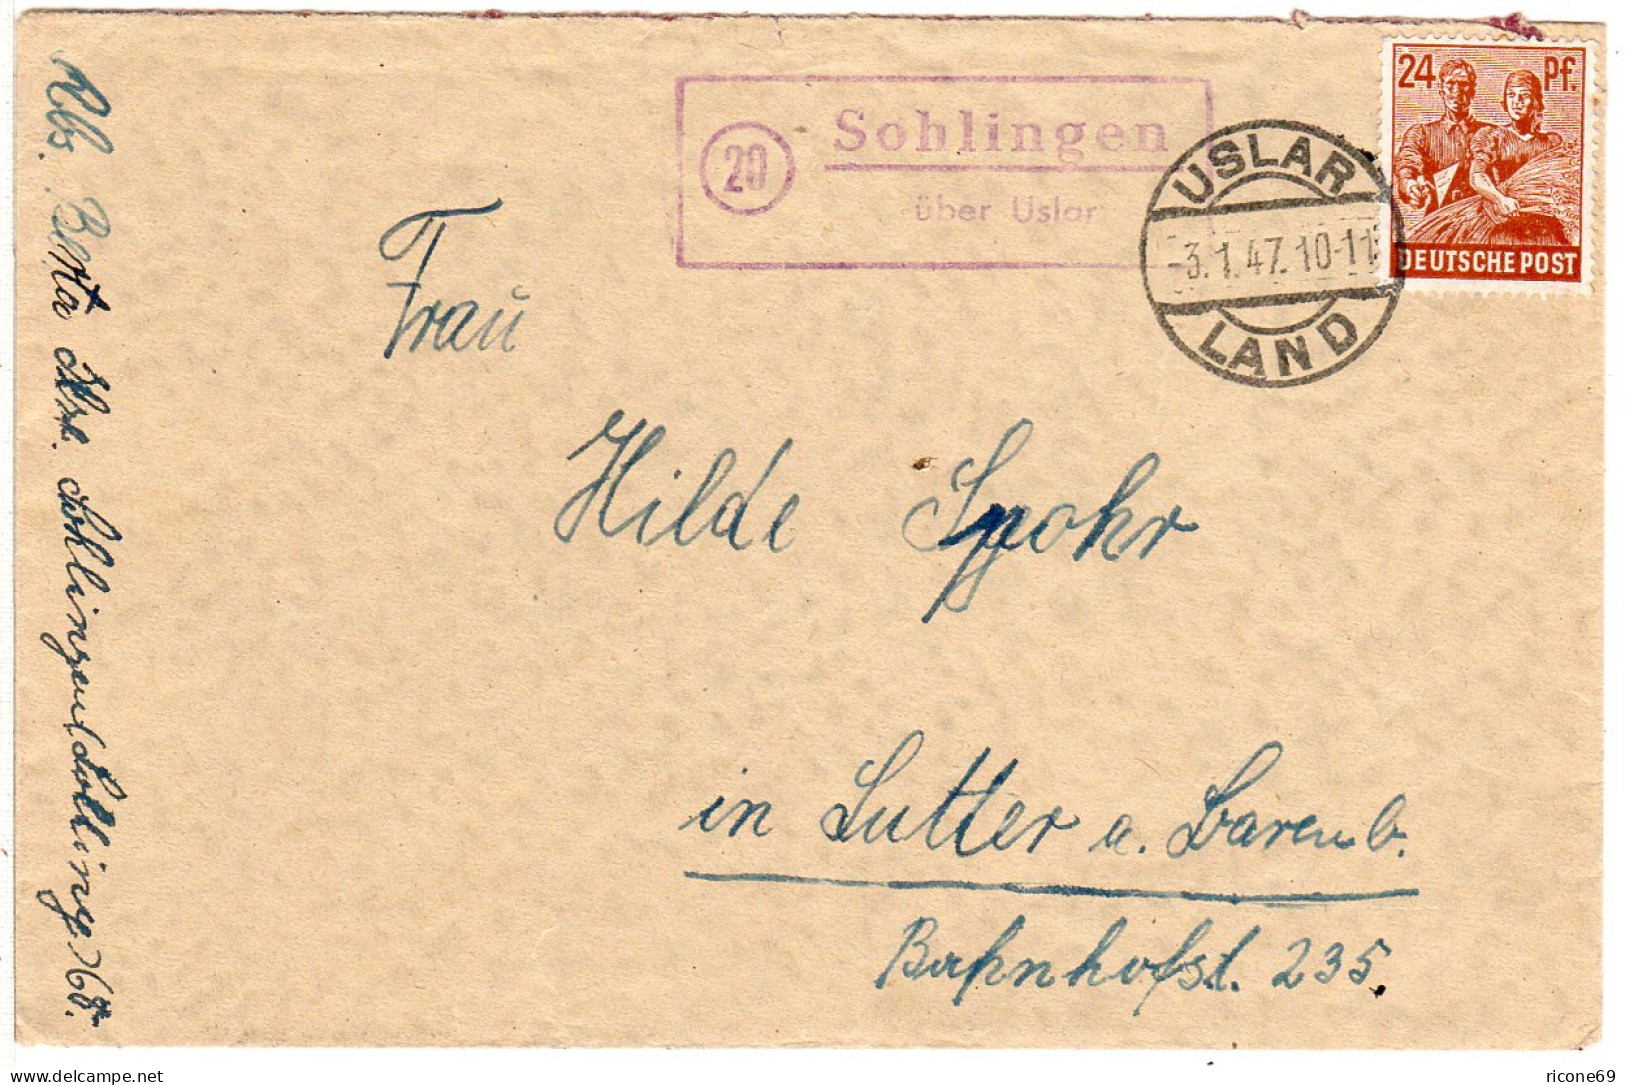 1947, Landpost Stpl. 20 SOHLINGEN über Uslar Auf Brief M. 24 Pf.  - Lettres & Documents